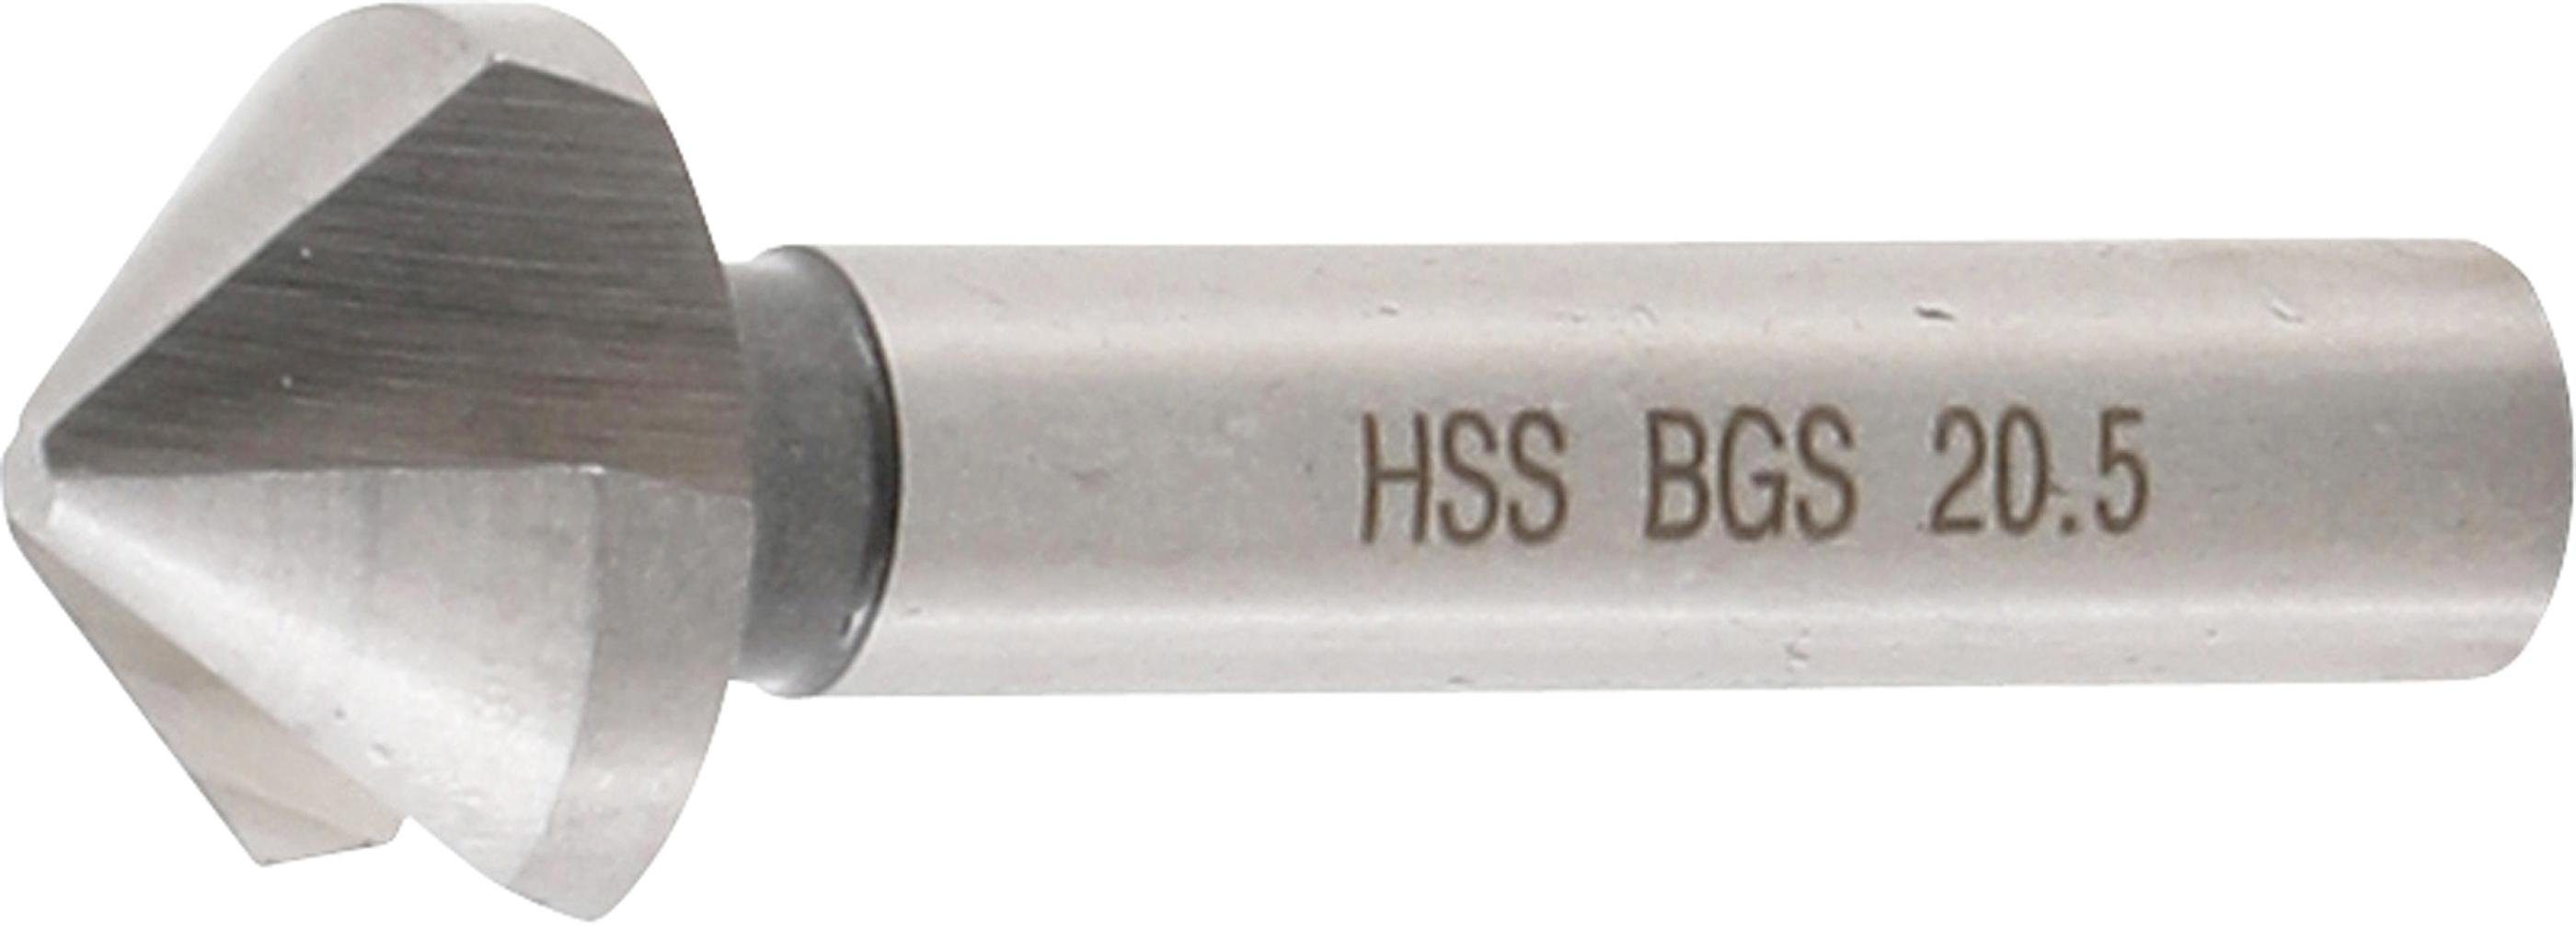 BGS technic Stufenbohrer Kegelsenker, HSS, DIN 335 Form C, Ø 20,5 mm